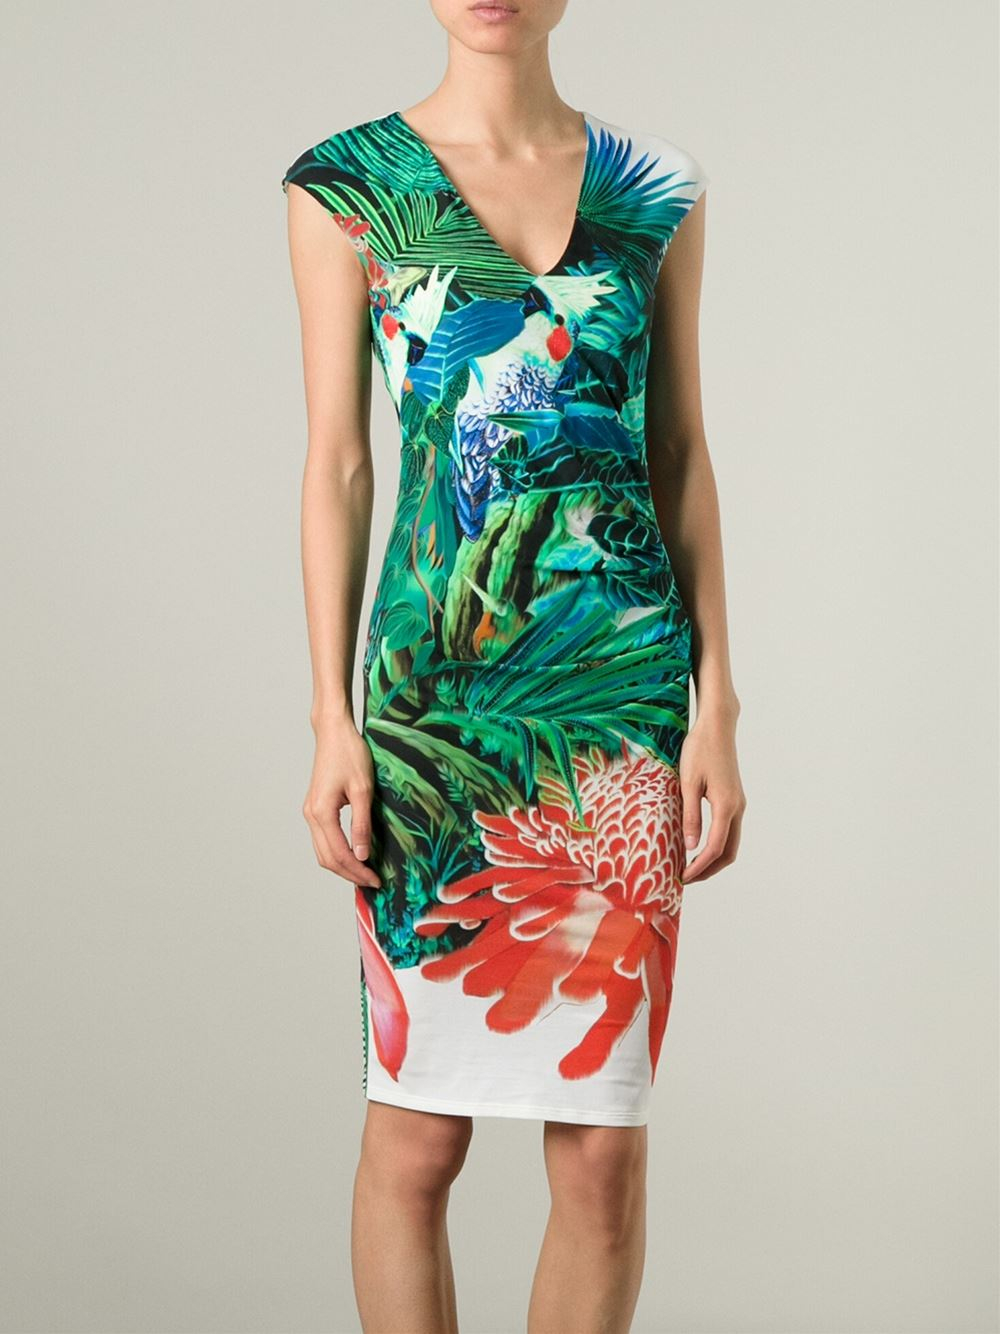 Lyst - Roberto cavalli Tropical Print Dress in Blue